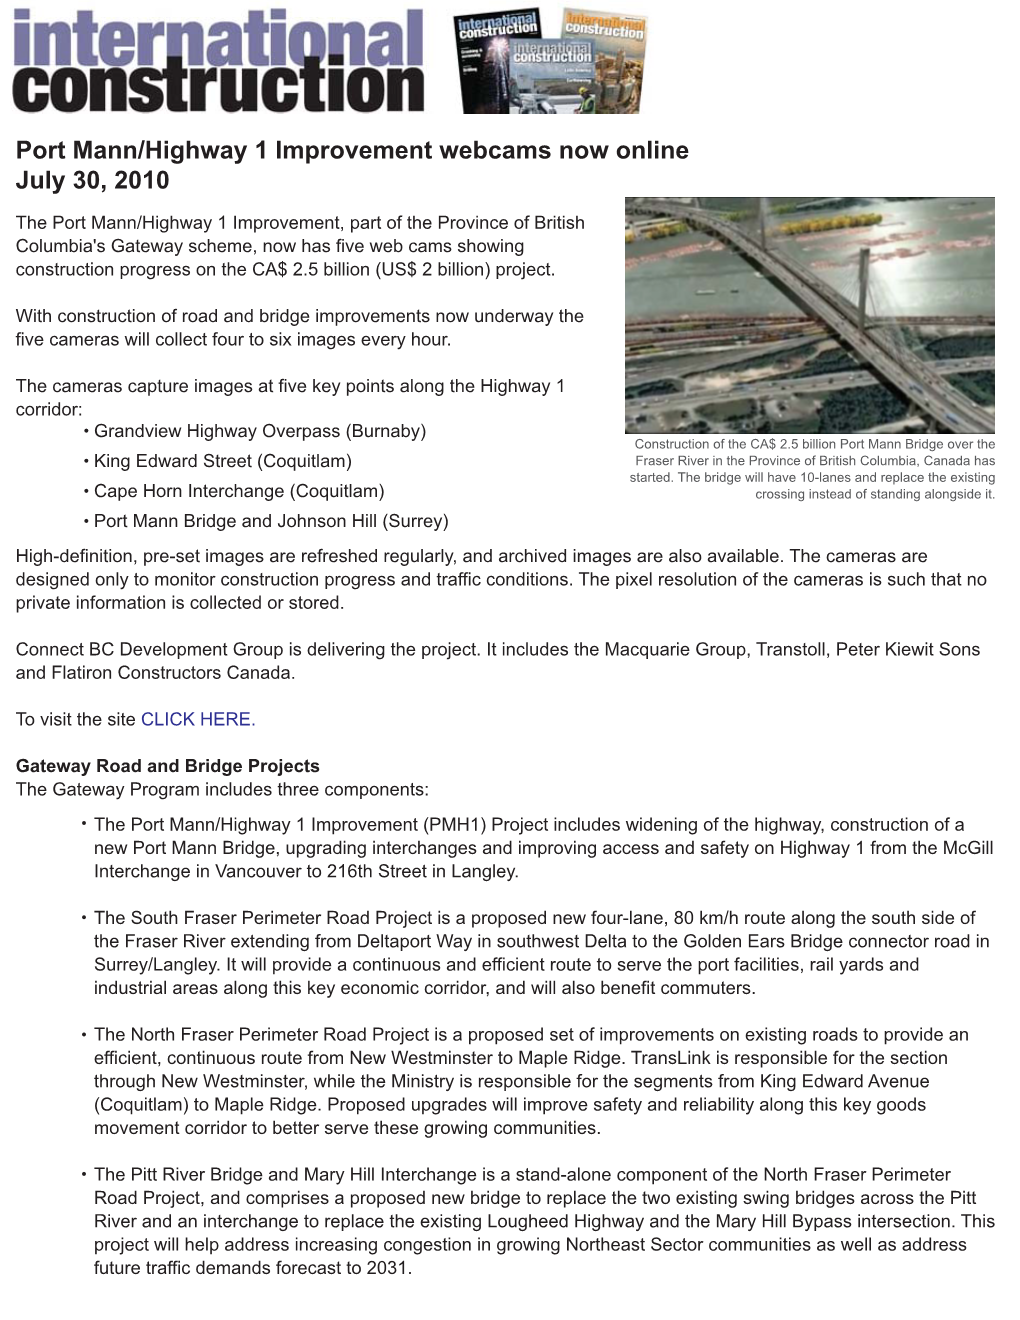 Port Mann/Highway 1 Improvement Webcams Now Online July 30, 2010